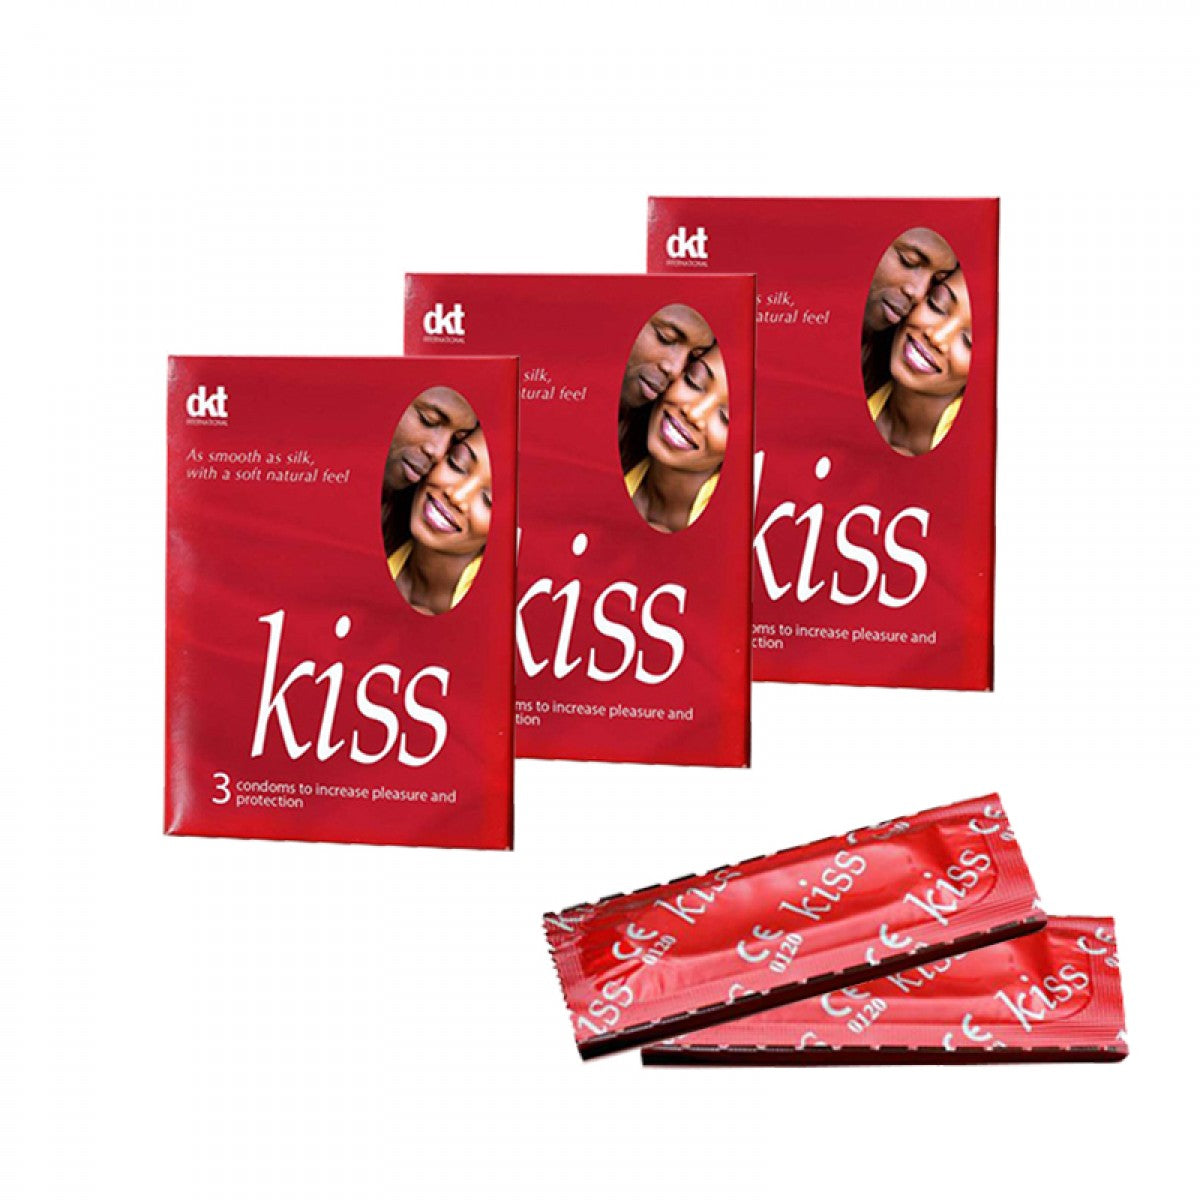 KISS CONDOMS - E-Pharmacy Ghana